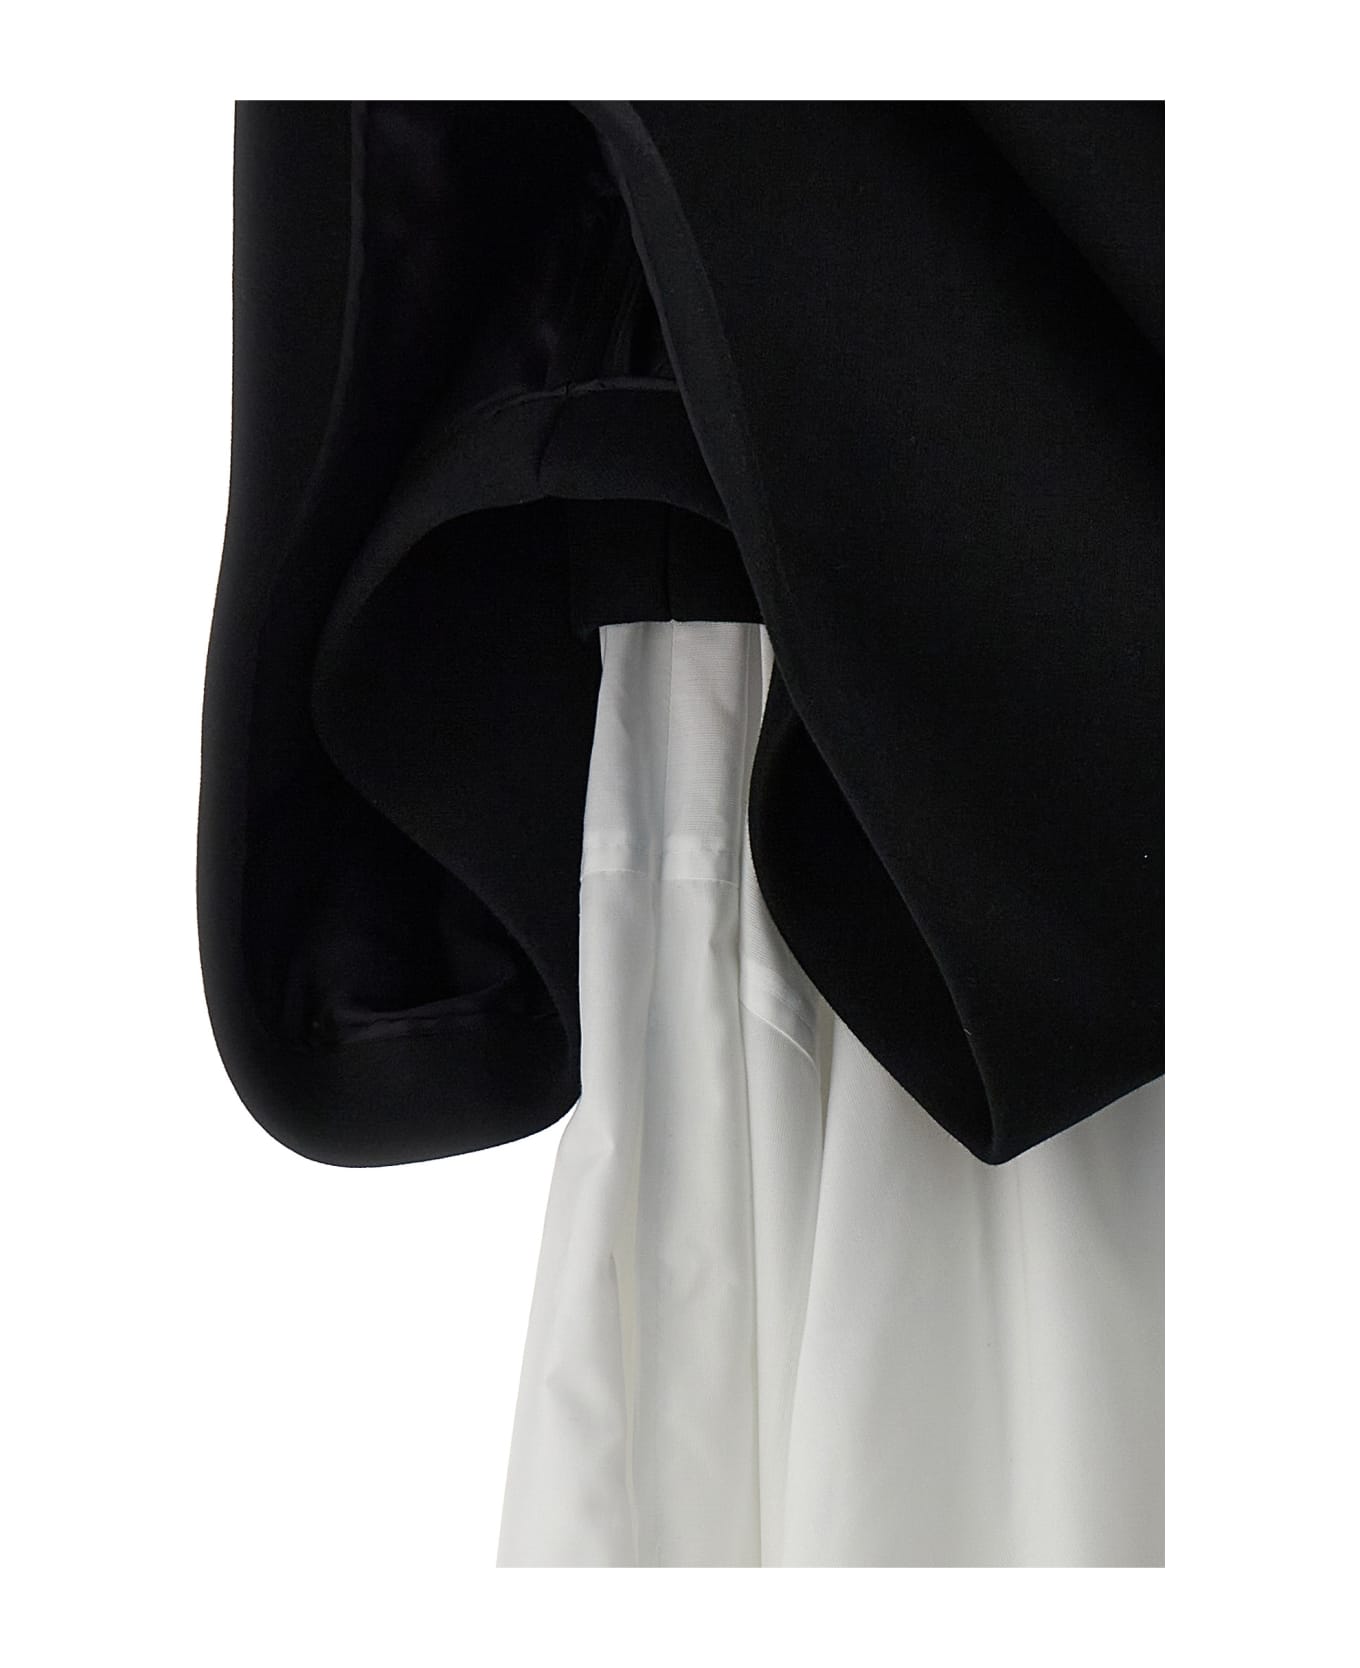 Comme des Garçons Hood Application Dress - White/Black